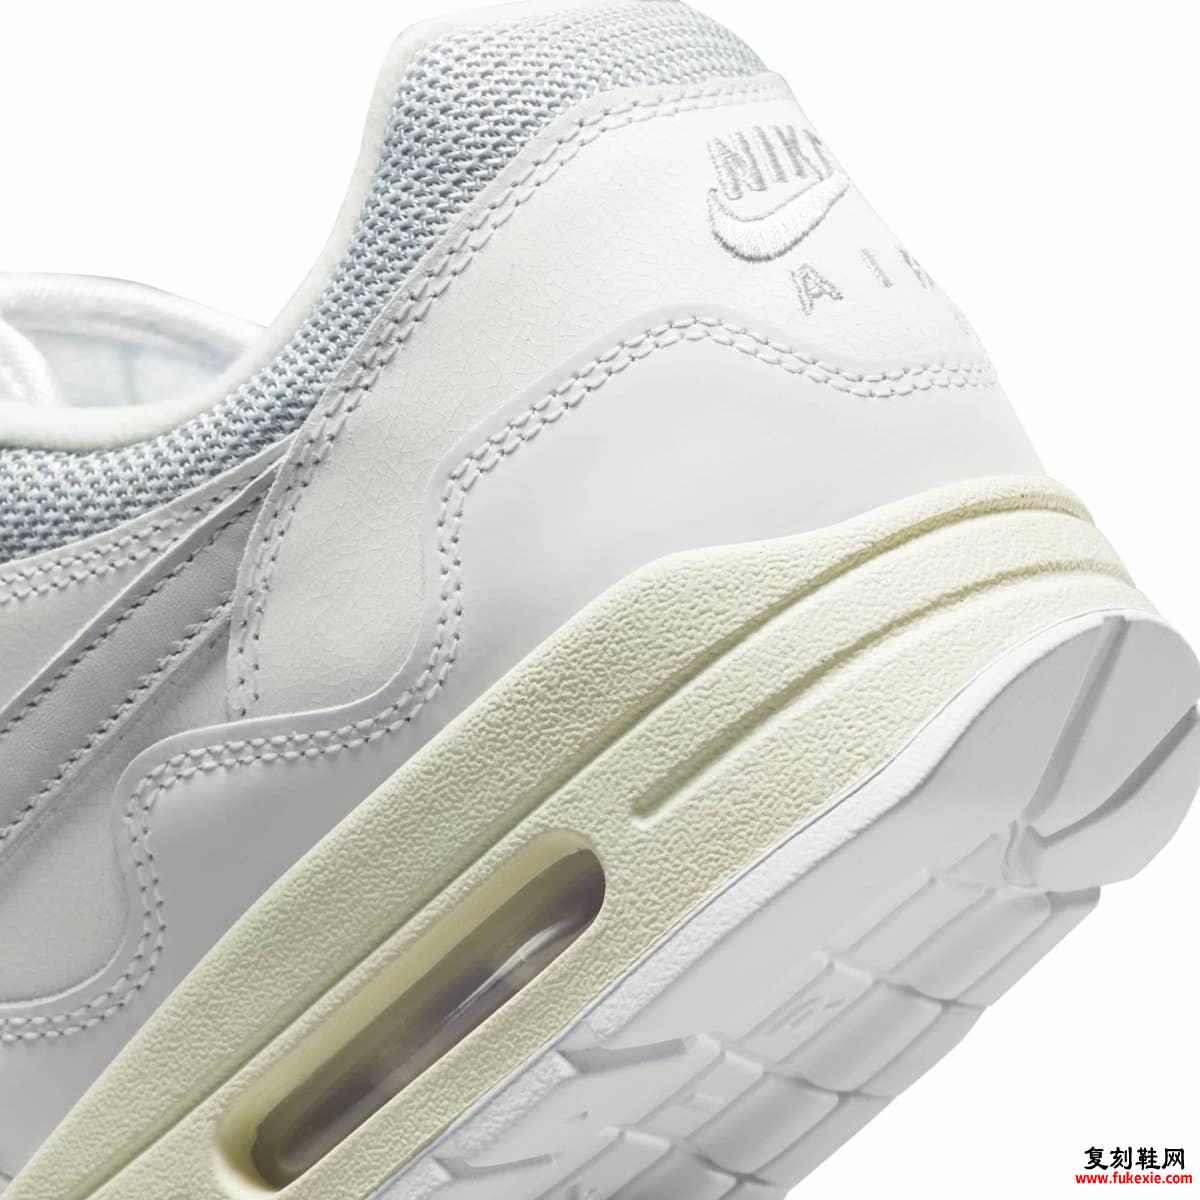 Patta Nike Air Max 1 白色灰色 DQ0299-100 发布日期